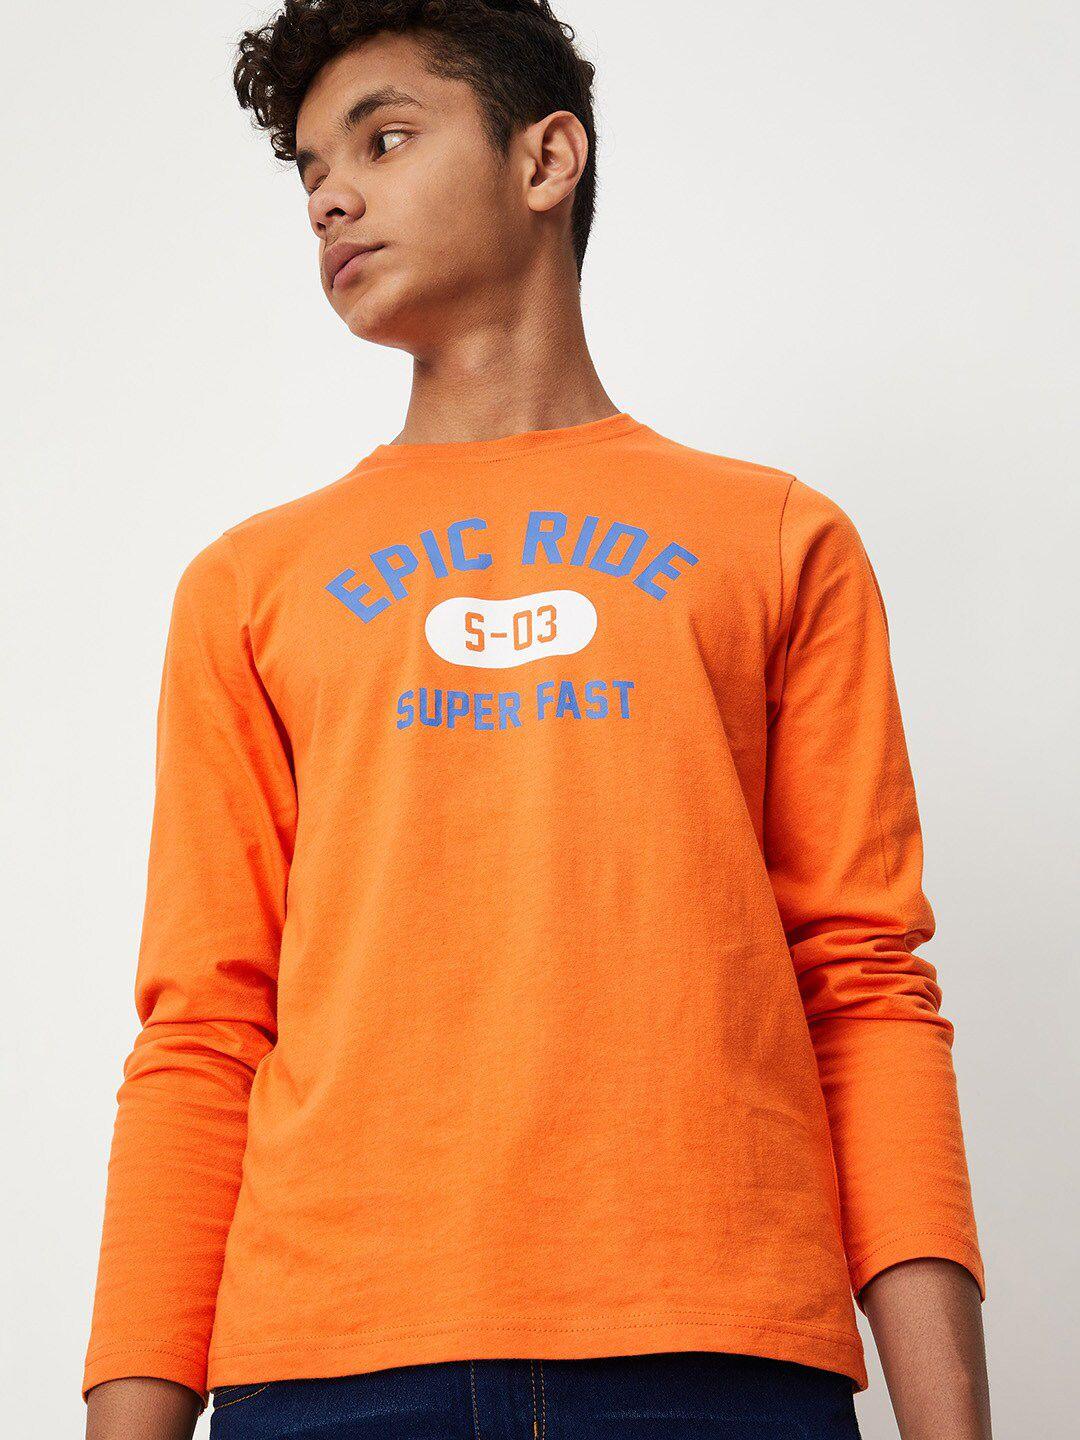 max-boys-orange-typography-printed-cotton-t-shirt